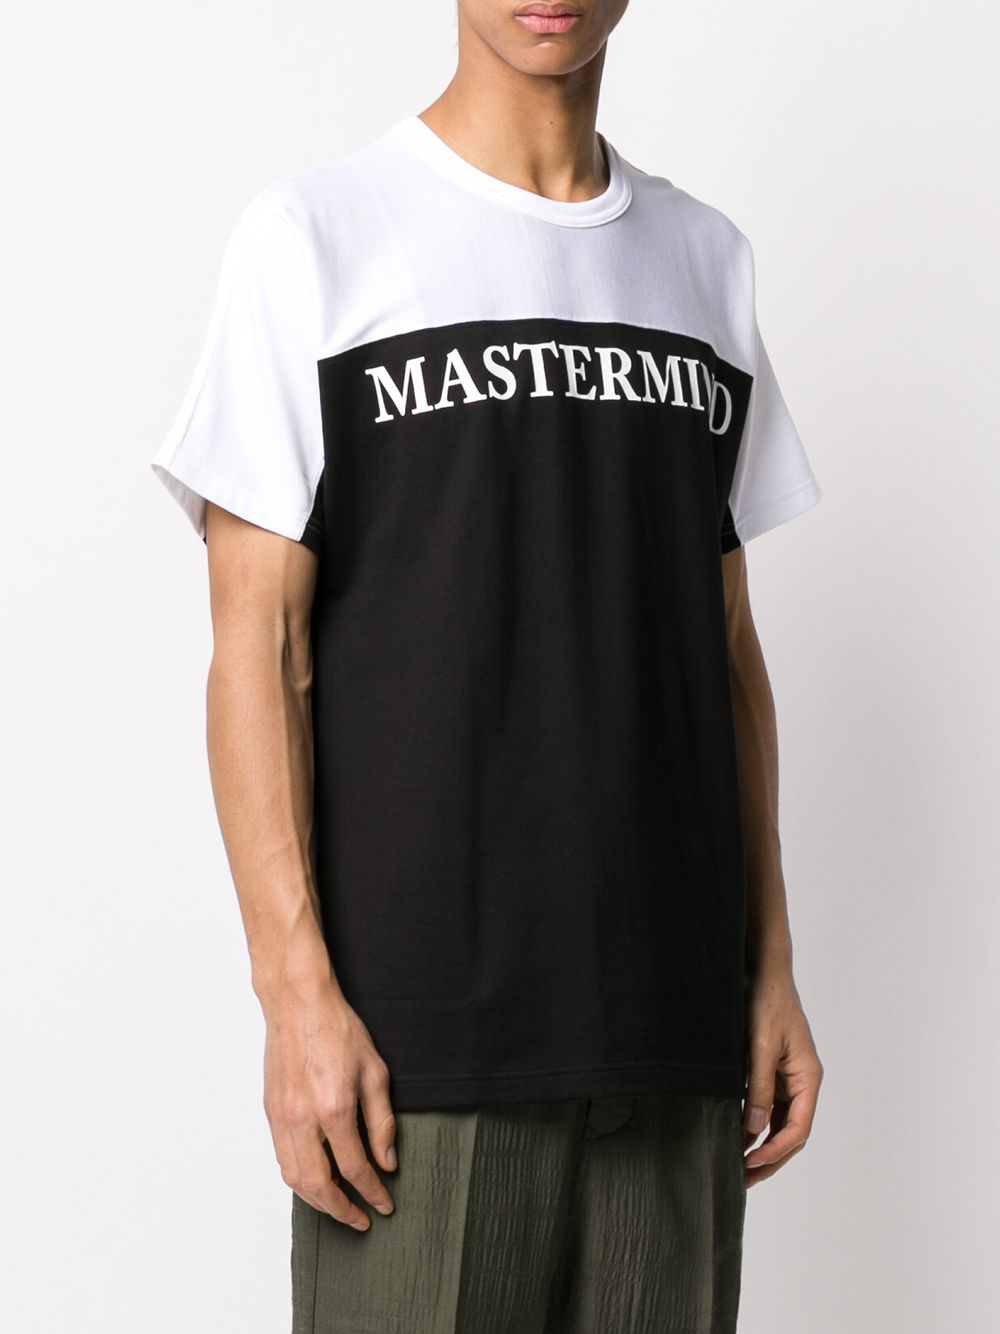 фото Mastermind world футболка с принтом